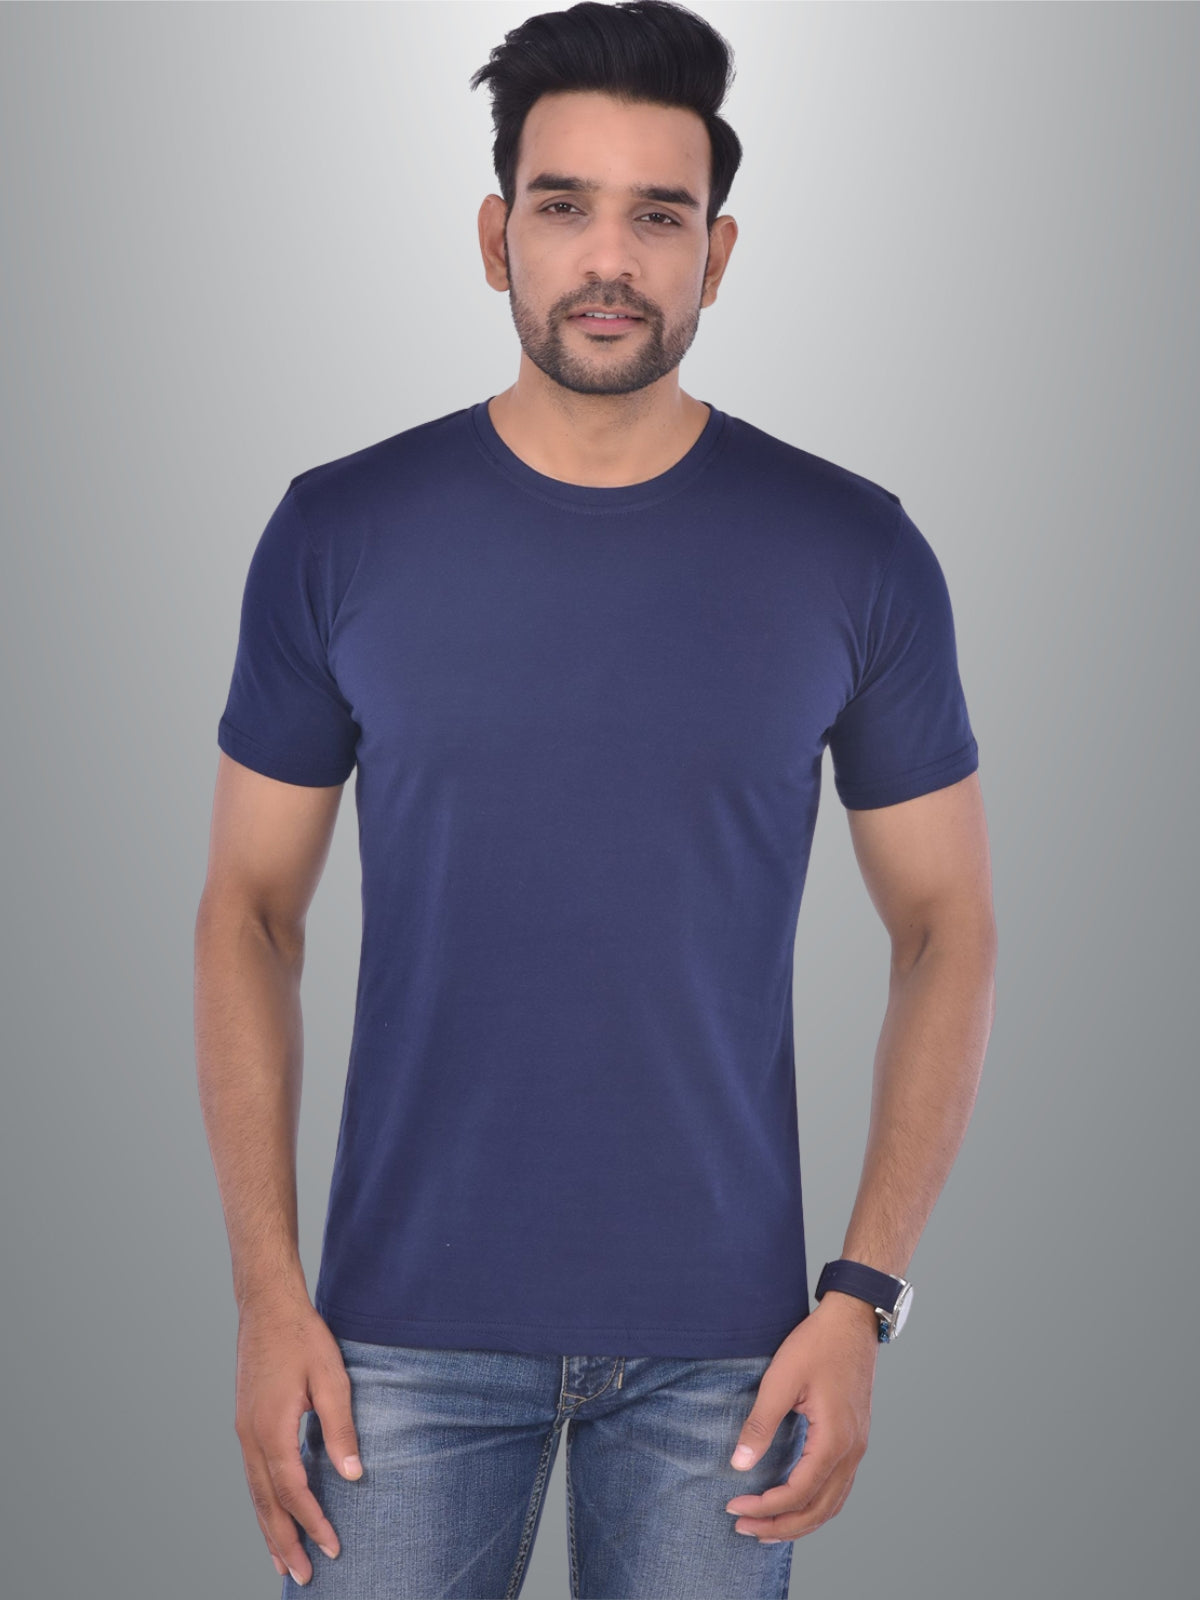 Mens Solid Round Neck  Half Sleeve Cotton Blend Navy Blue T-shirt